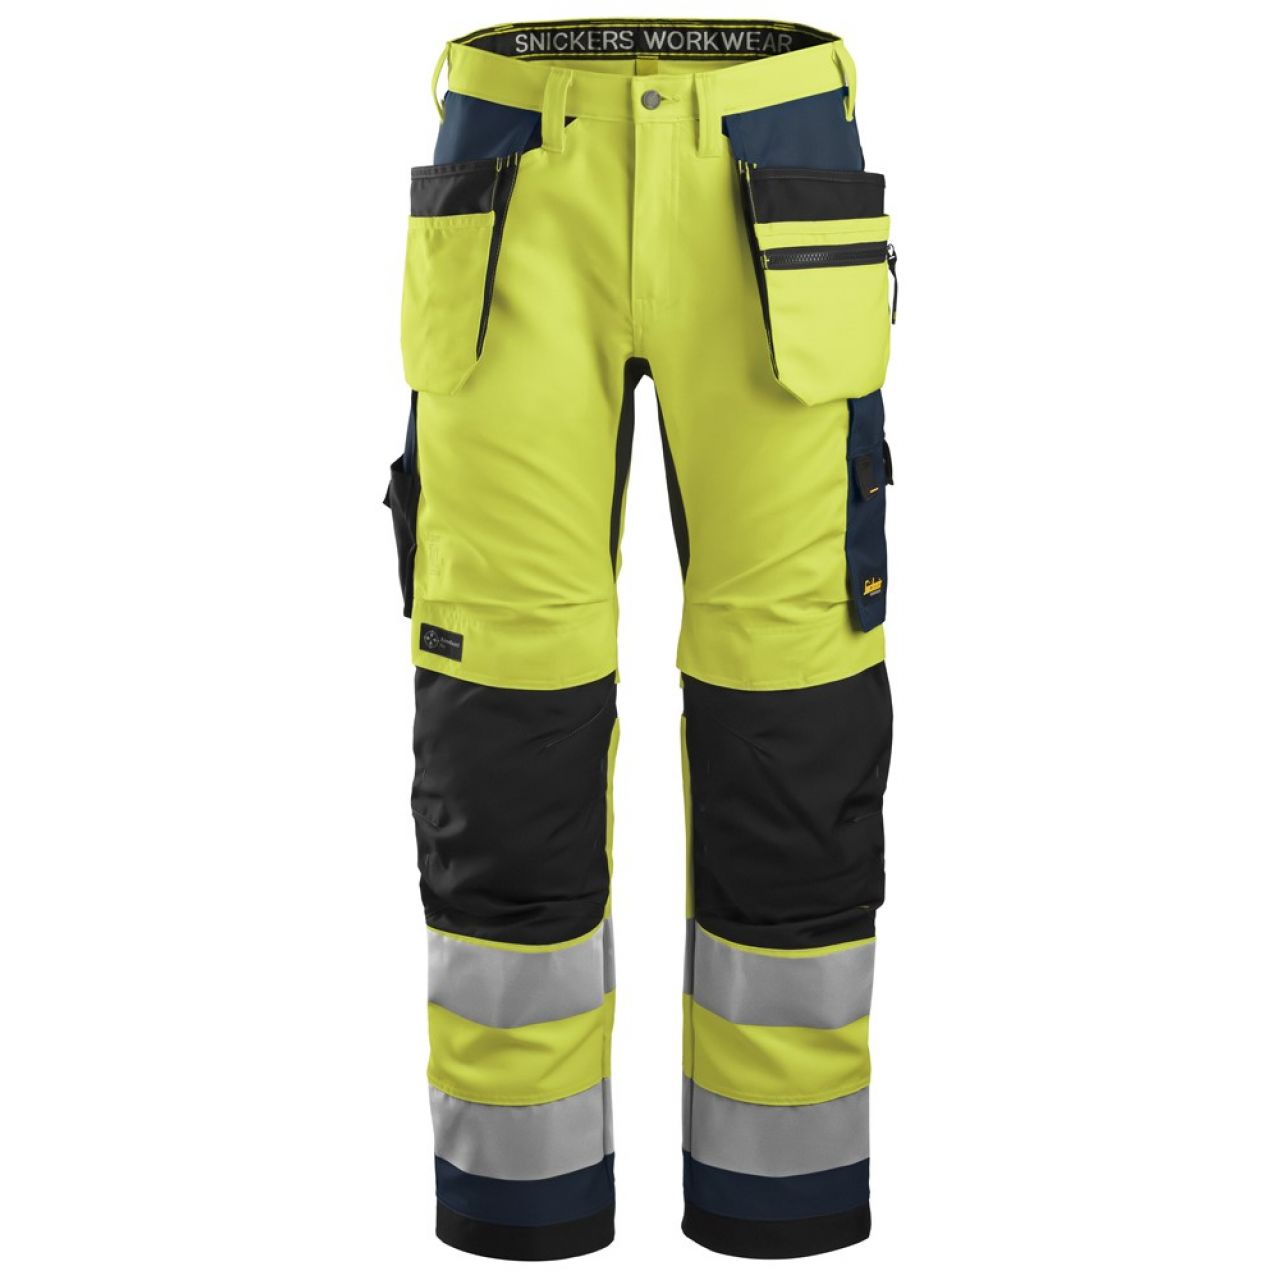 6230 Pantalones largos de trabajo de alta visibilidad clase 2 con bolsillos flotantes AllroundWork amarillo-azul marino talla 116